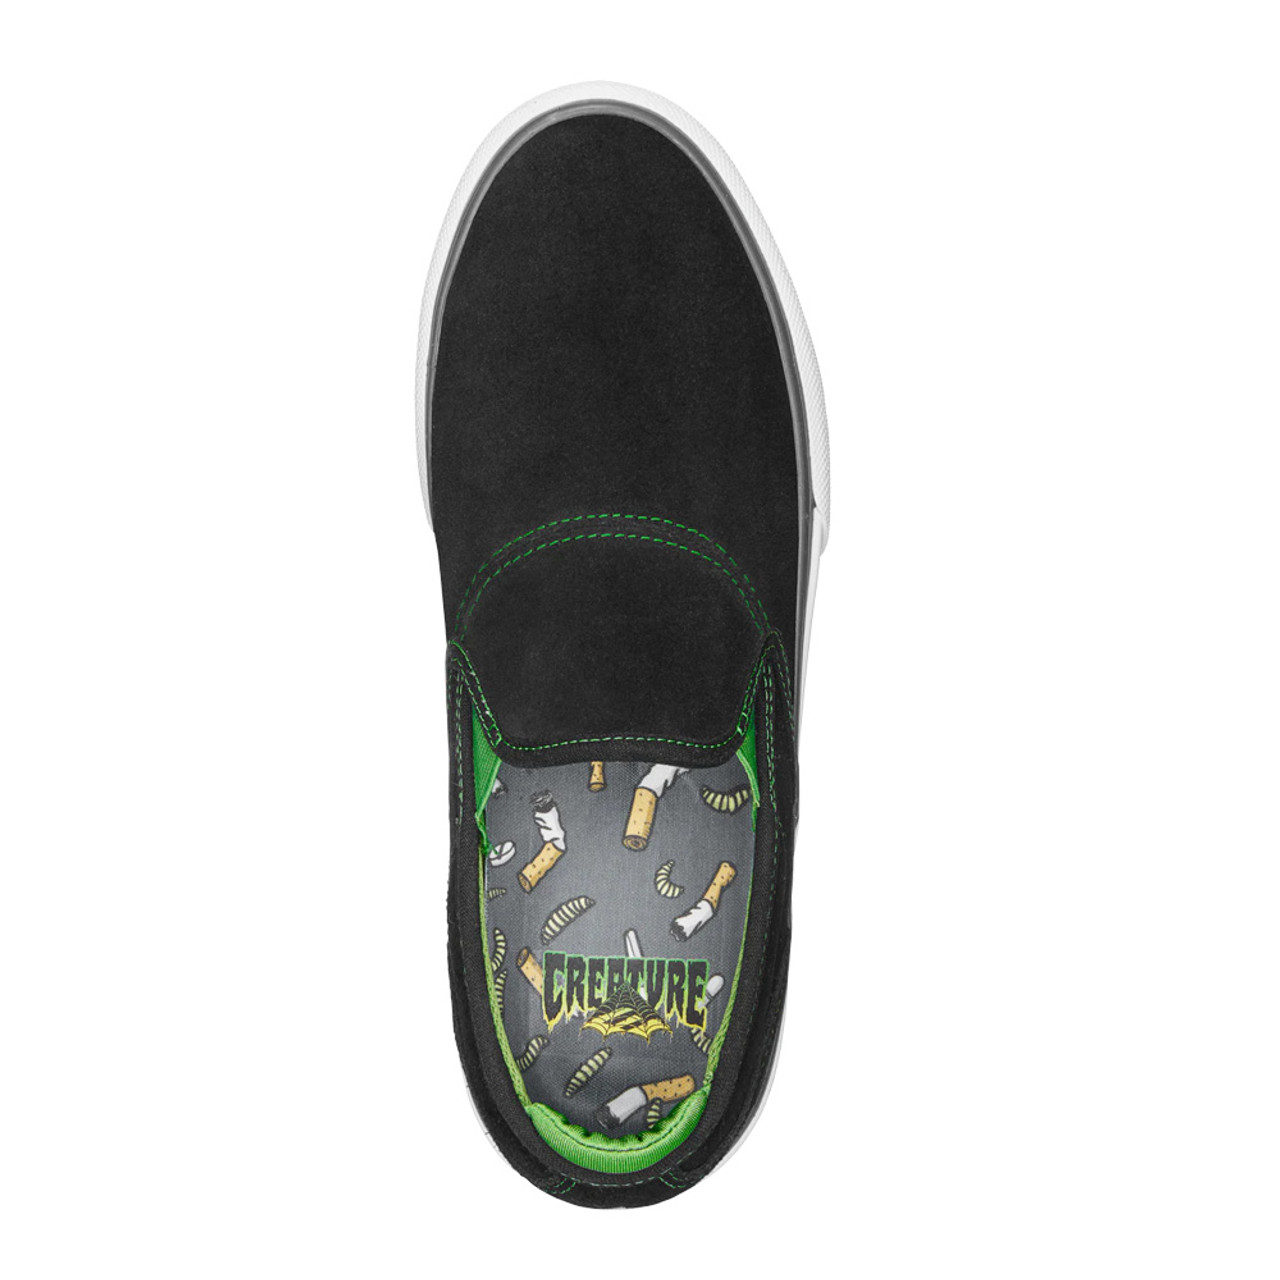 EMERICA x CREATURE Wino G6 Slip-On Shoes Black/Green